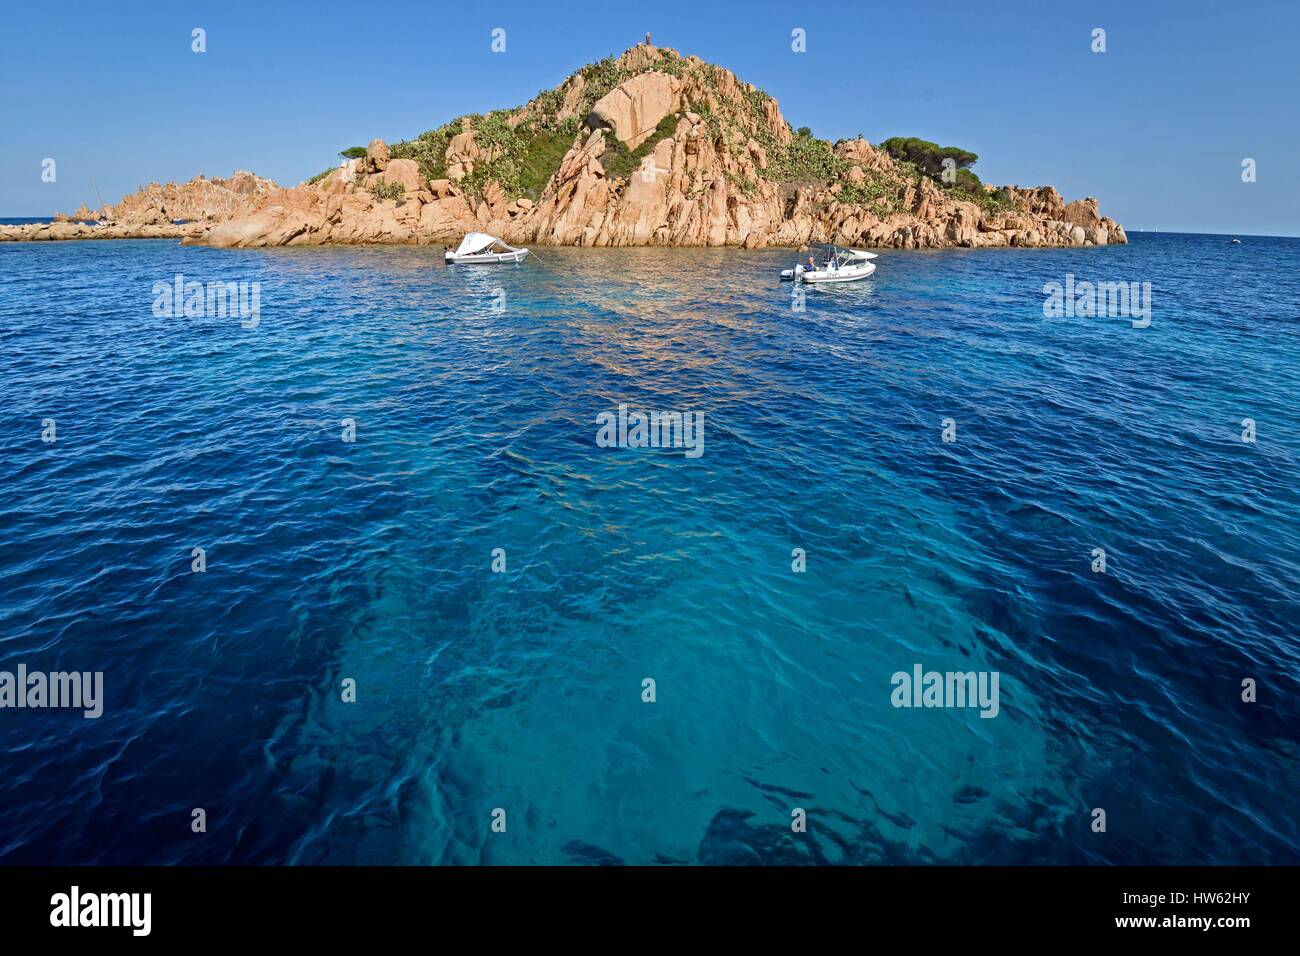 Italy, Sardinia, Tyrrhenian Sea, Gulf of Orosei, Arbatax island frequented by tourists in pleasure boats Stock Photo